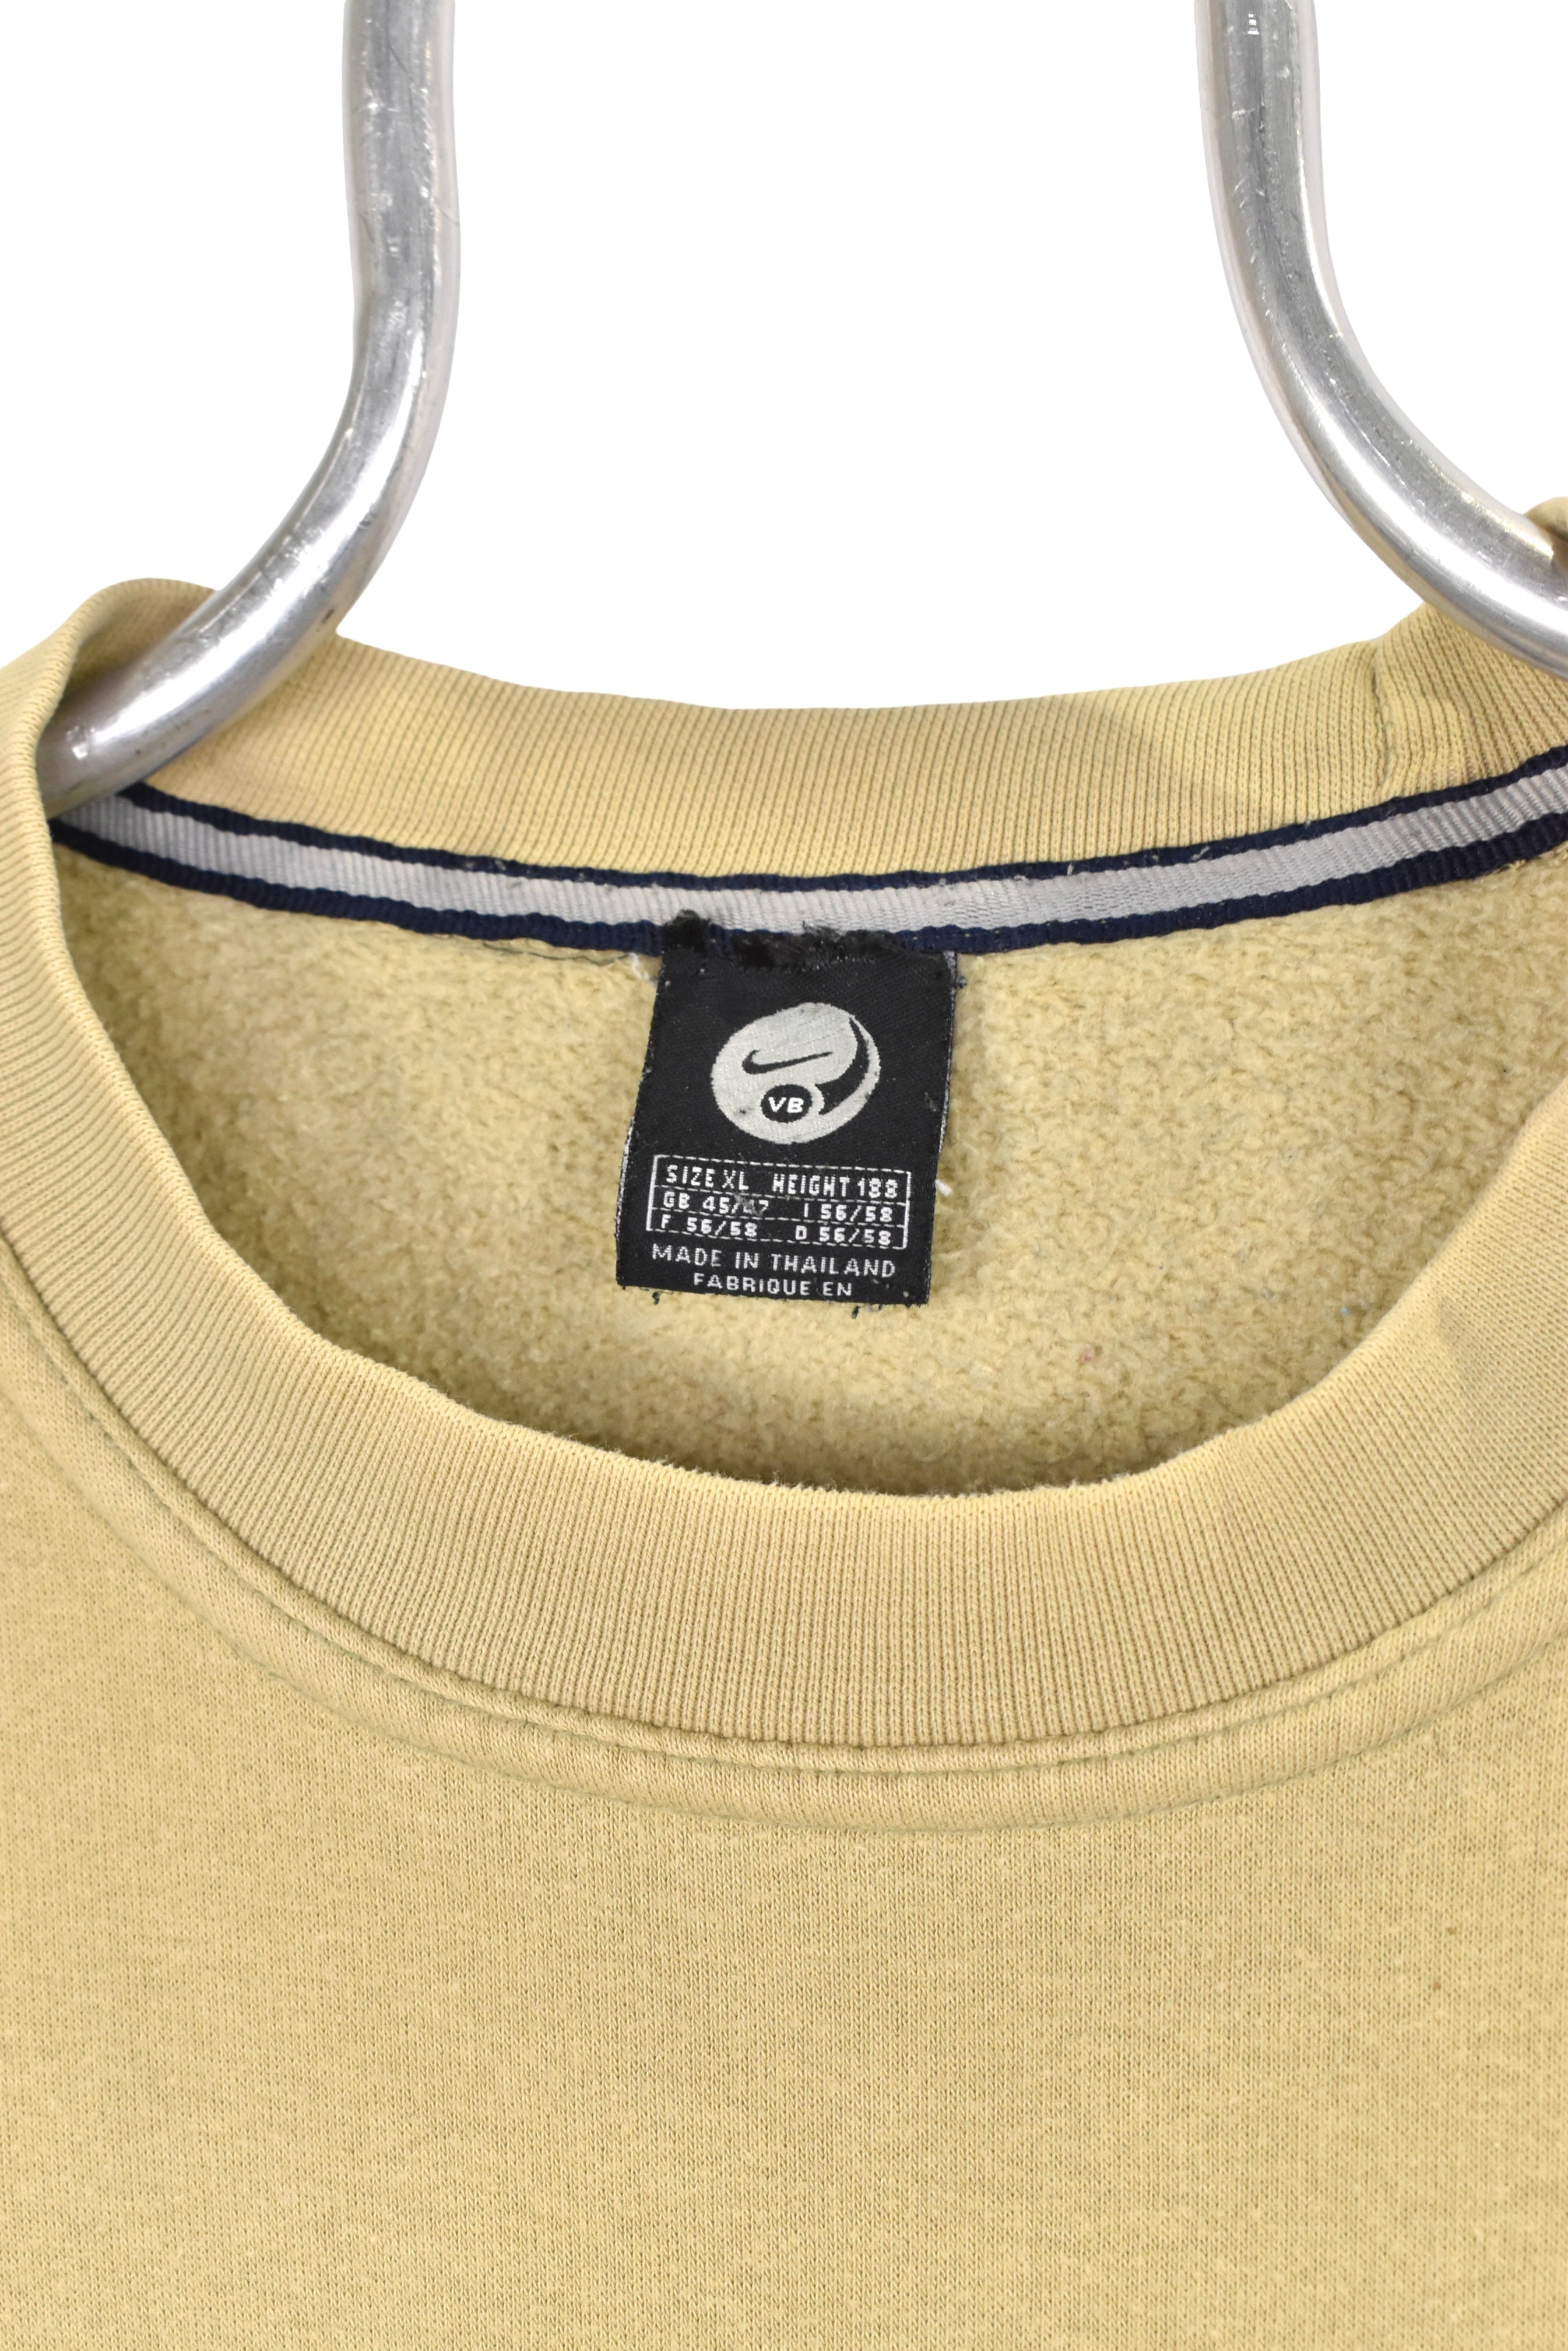 Vintage Nike sweatshirt, beige embroidered crewneck - XL